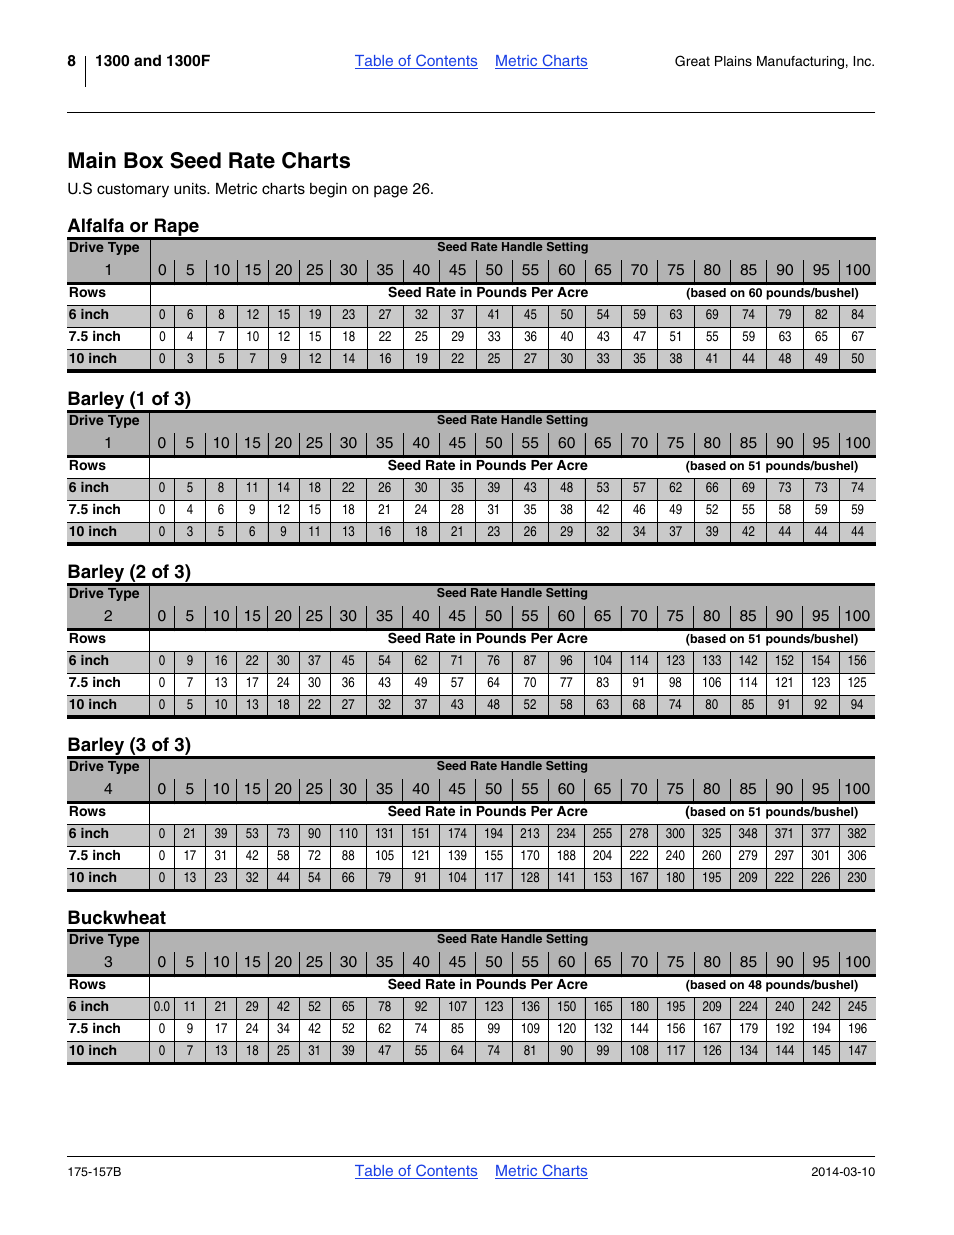 Main box seed rate charts, Alfalfa or rape, Barley (1 of 3) | Great